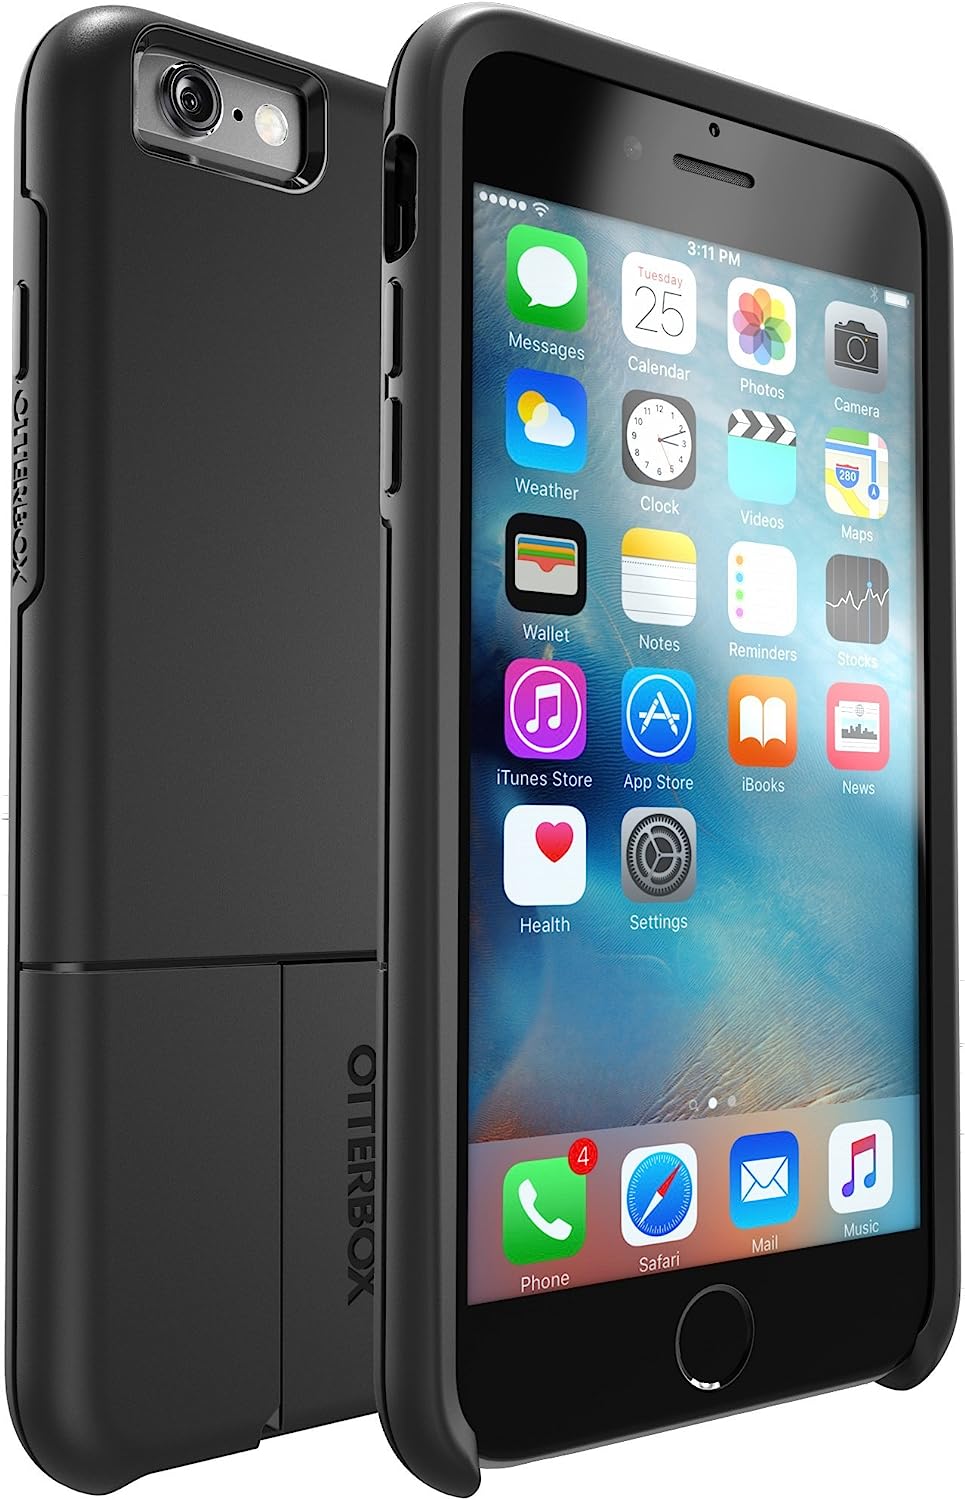 OtterBox uniVERSE SERIES Case for Apple iPhone 6S Plus/6 Plus - Black (New)